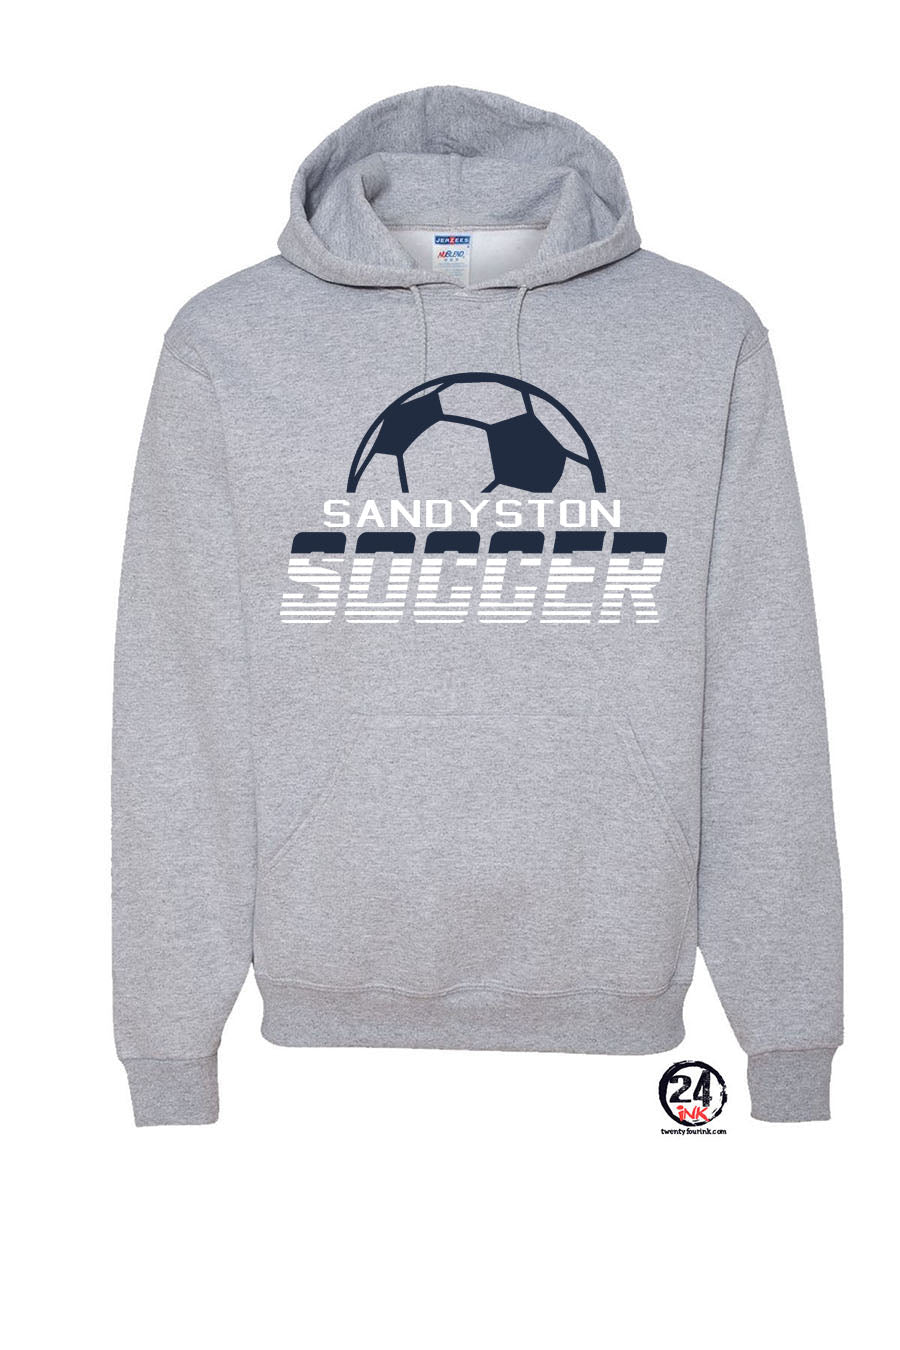 Sandyston Soccer Design 3 Hooded Sweatshirt